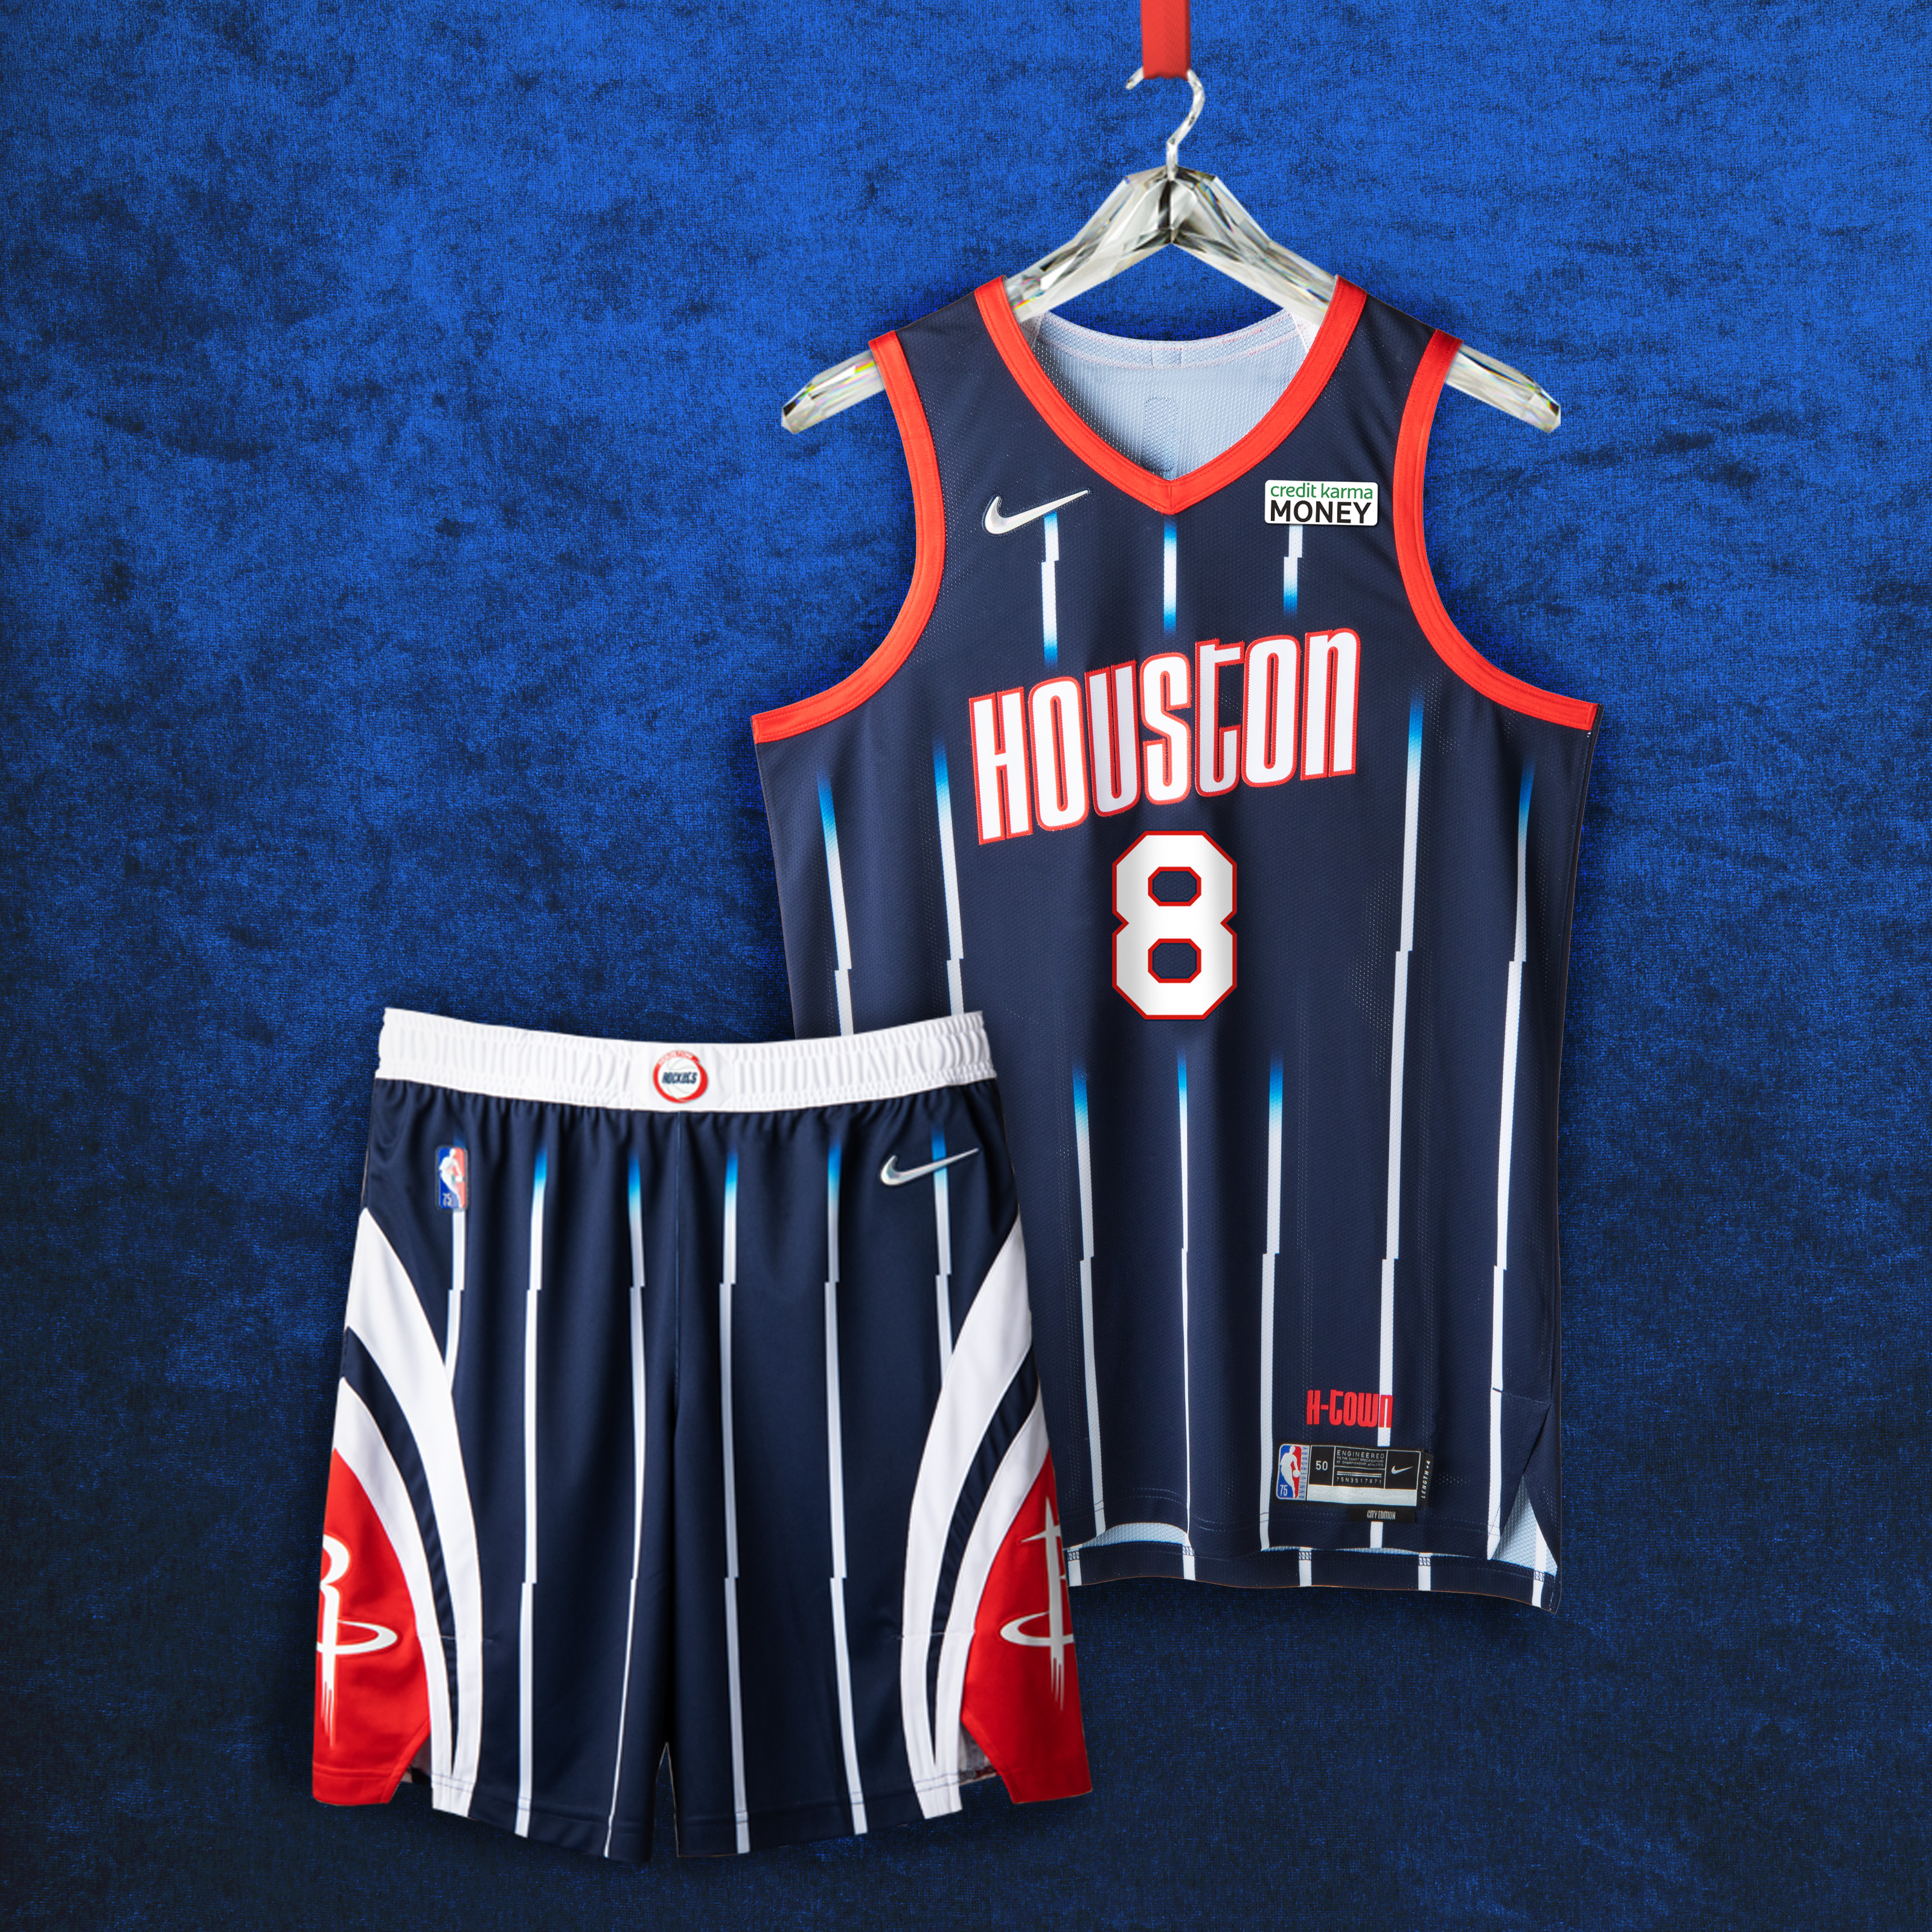 NBA City Edition jerseys, ranked - Sports Illustrated